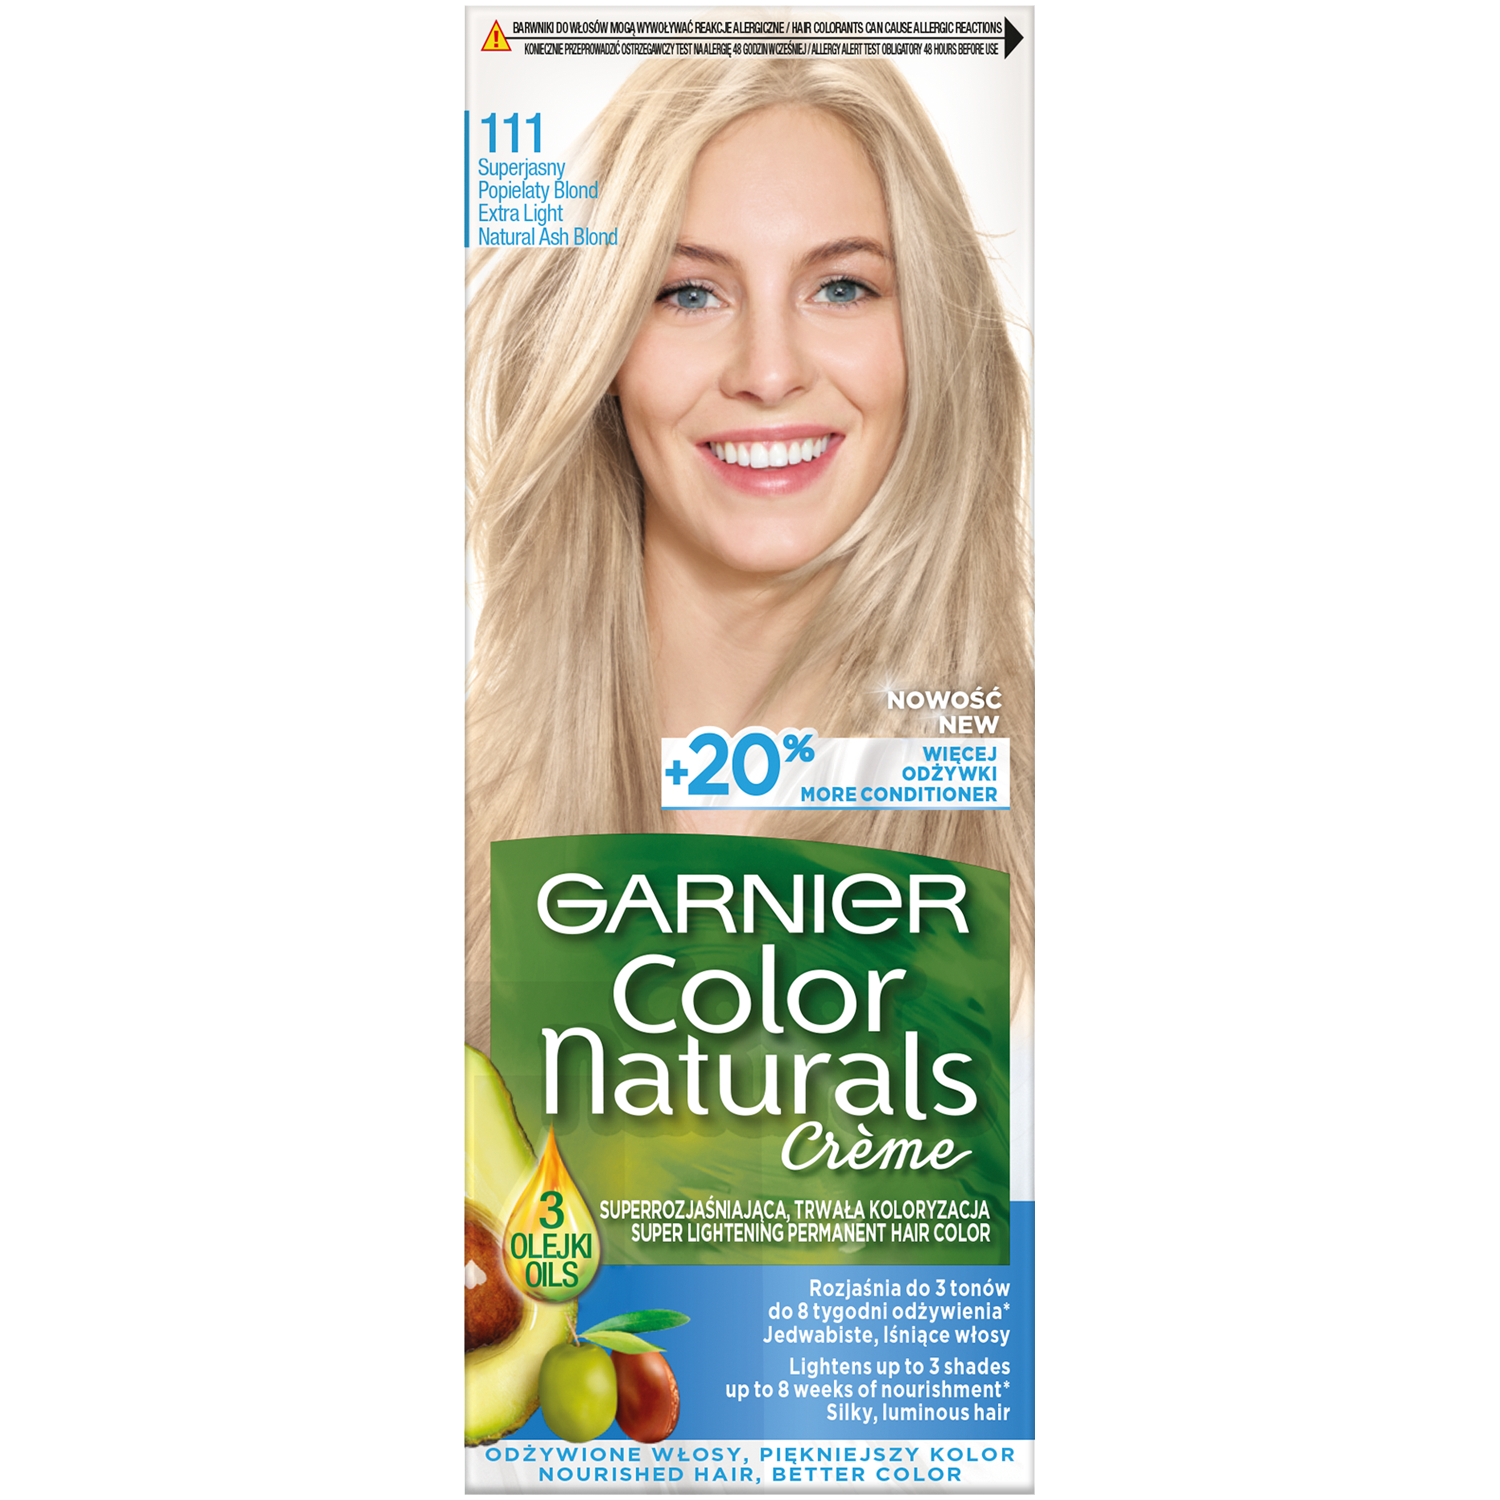 Garnier Color Naturals Créme farba do włosów 111 super jasny popielaty blond,  1 opak. | hebe.pl